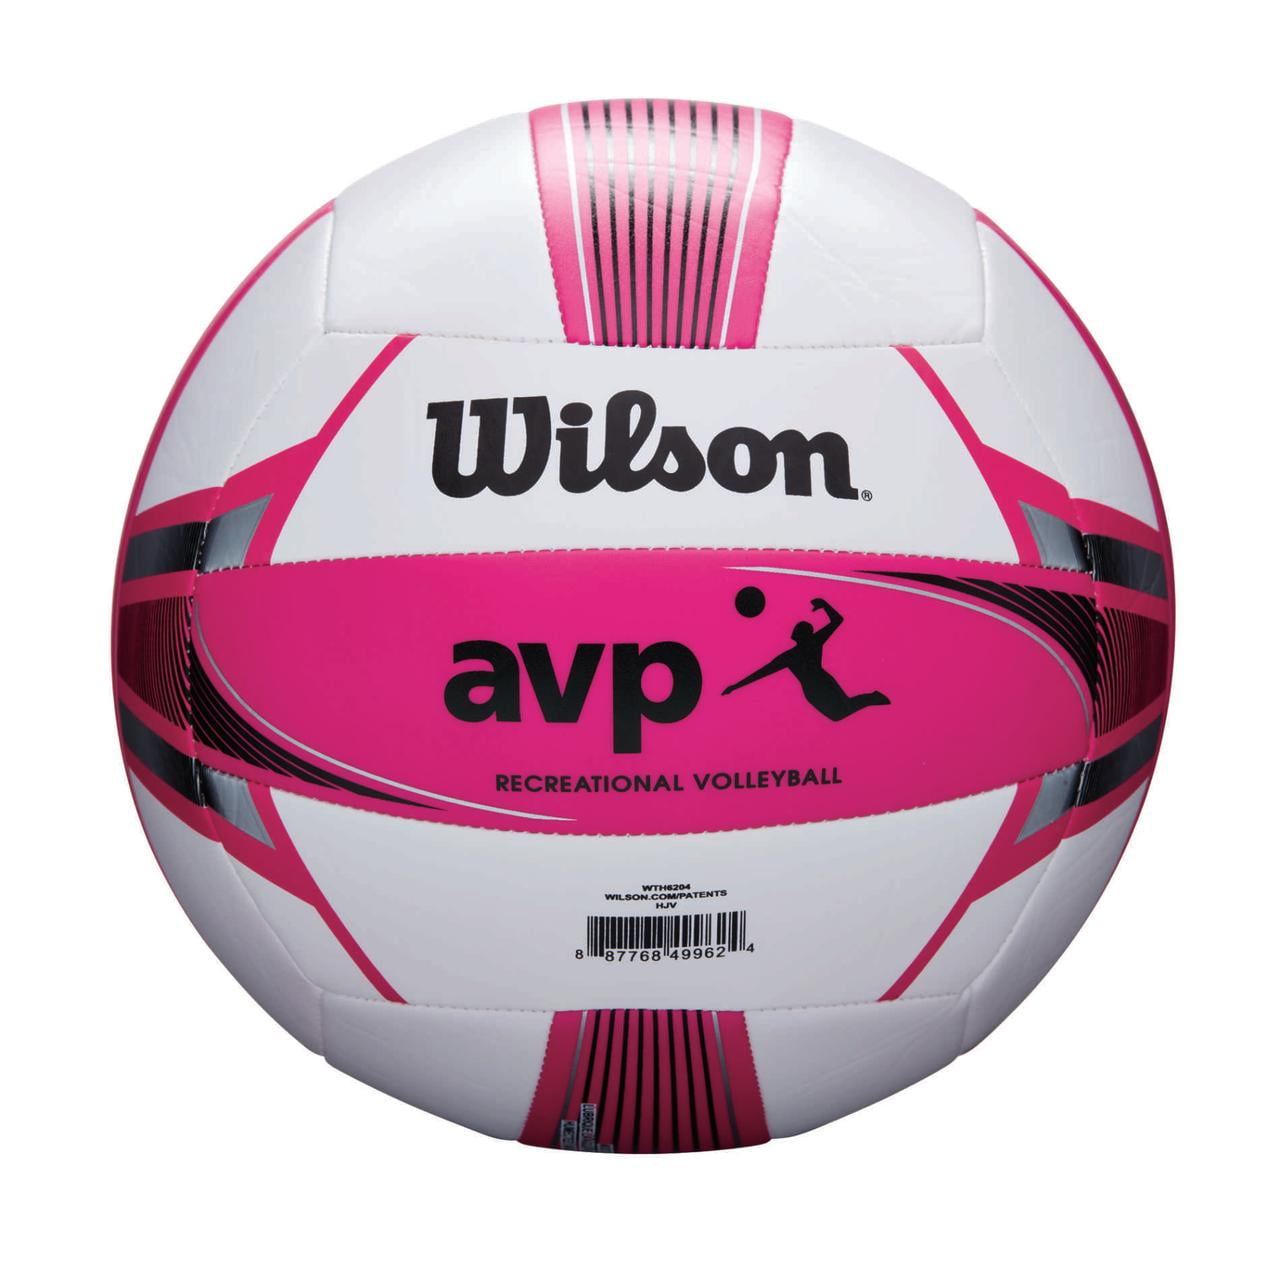 Wilson AVP Recreational Beach Volleyball Pink White